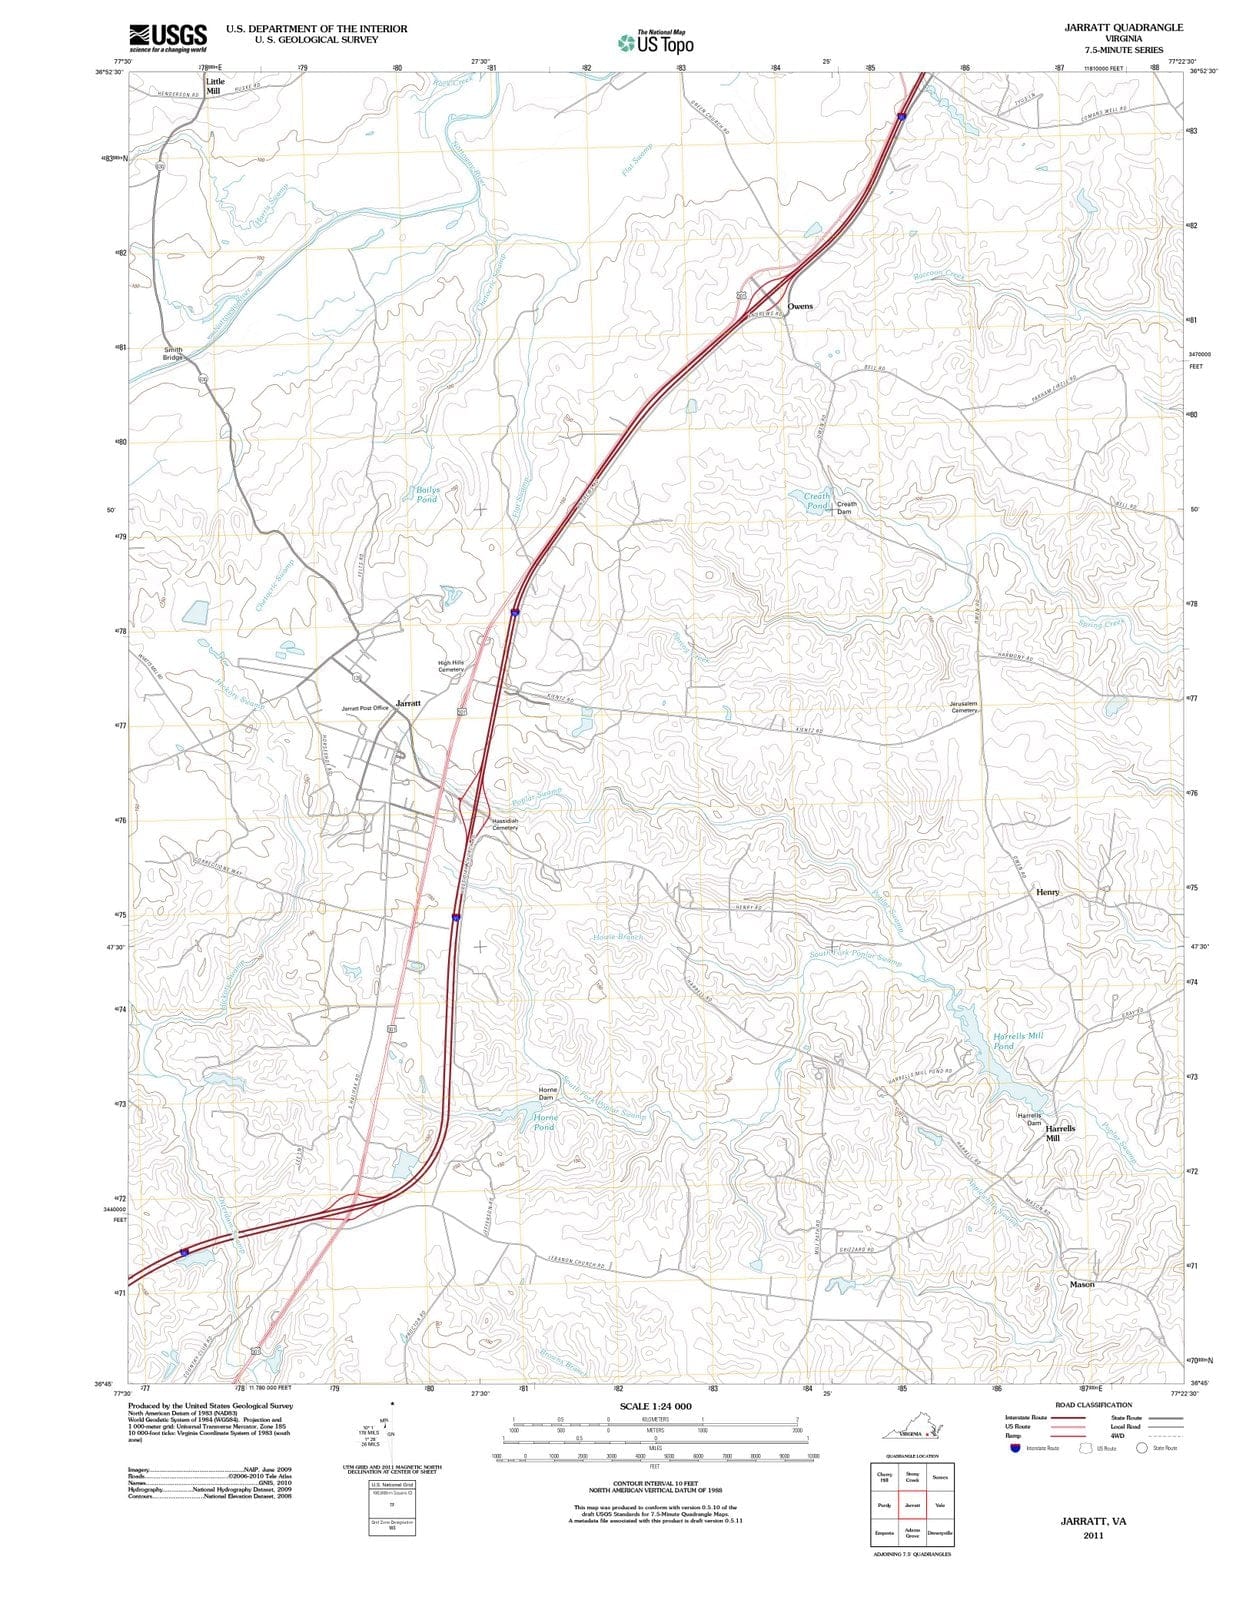 2011 Jarratt, VA - Virginia - USGS Topographic Map